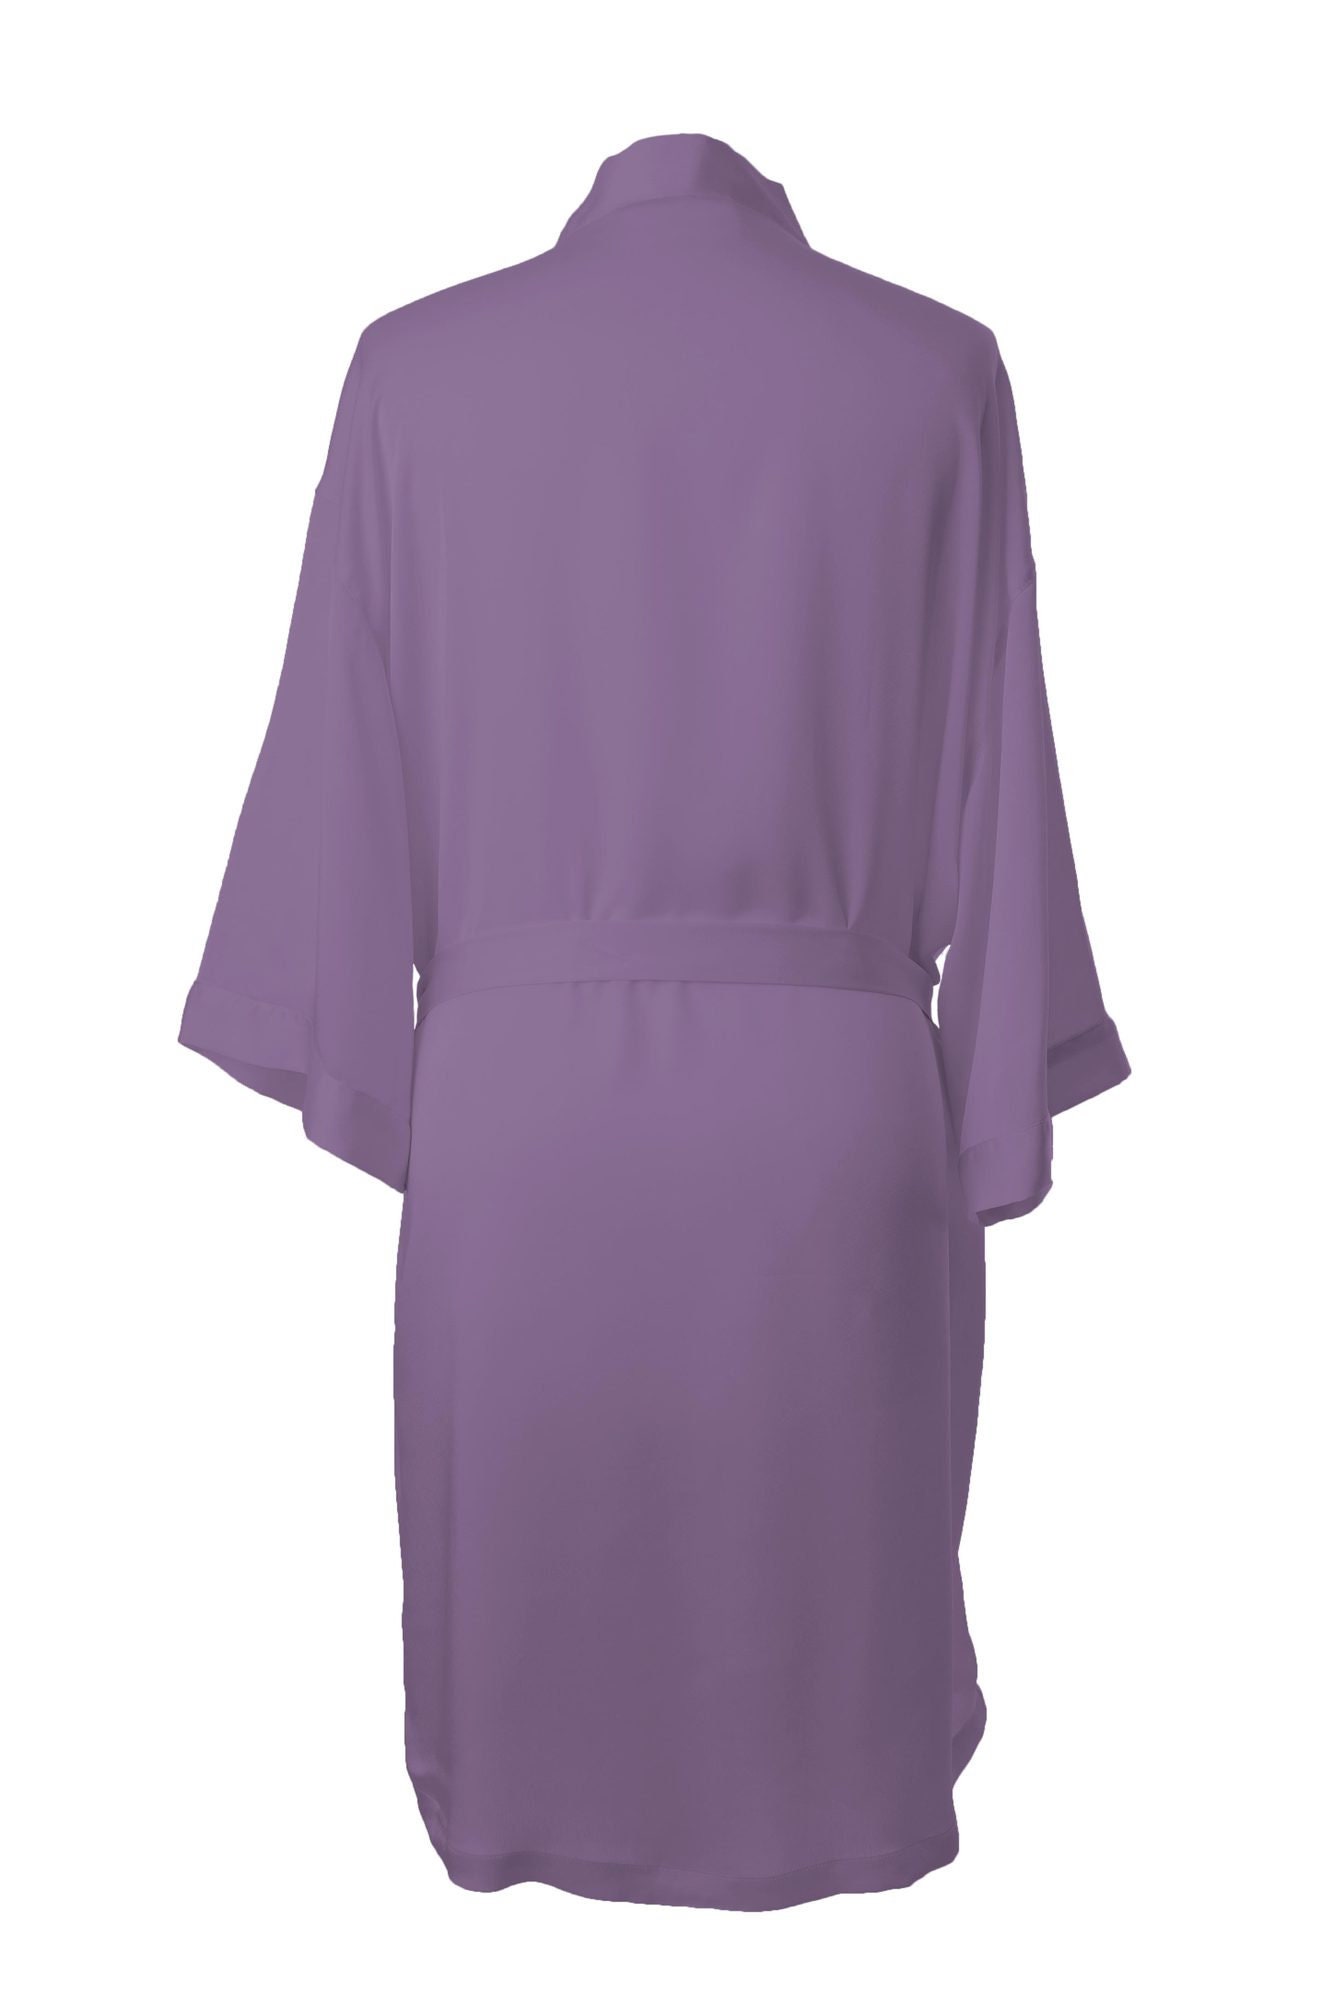 Marlon Ladies Polycotton Dressing Gown Size UK 10 to 30 Bath Robe wrap tie  Pockets Plus (24/26, Lilac) : Amazon.co.uk: Fashion